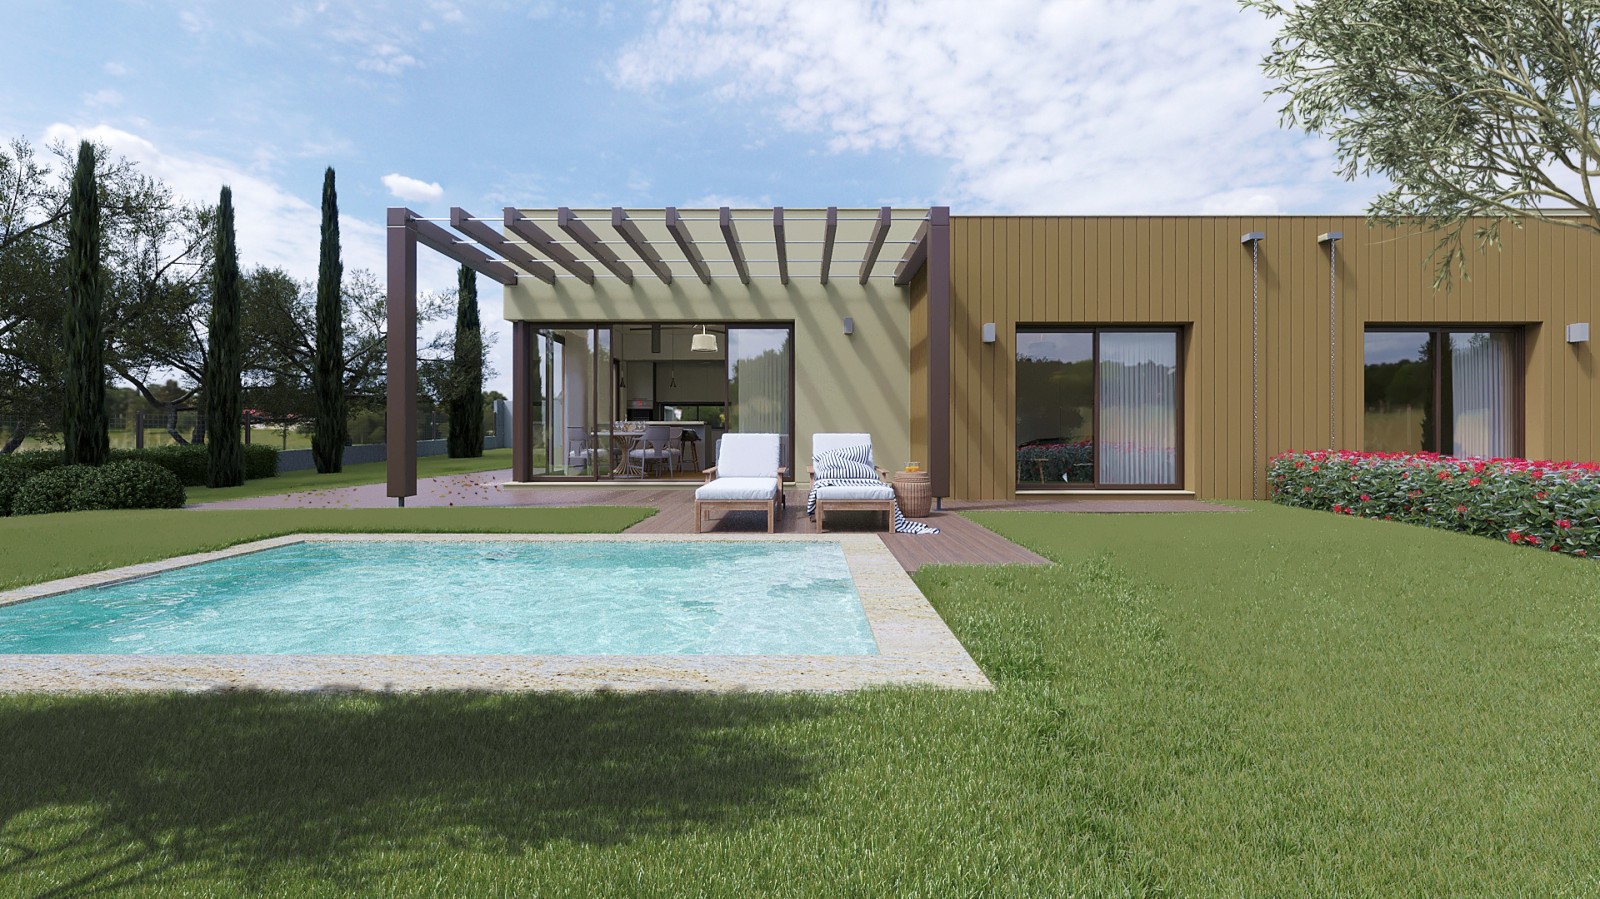 2 bedroom semi-detached villa with swimming pool for sale in Golf resort, Algarve_218819